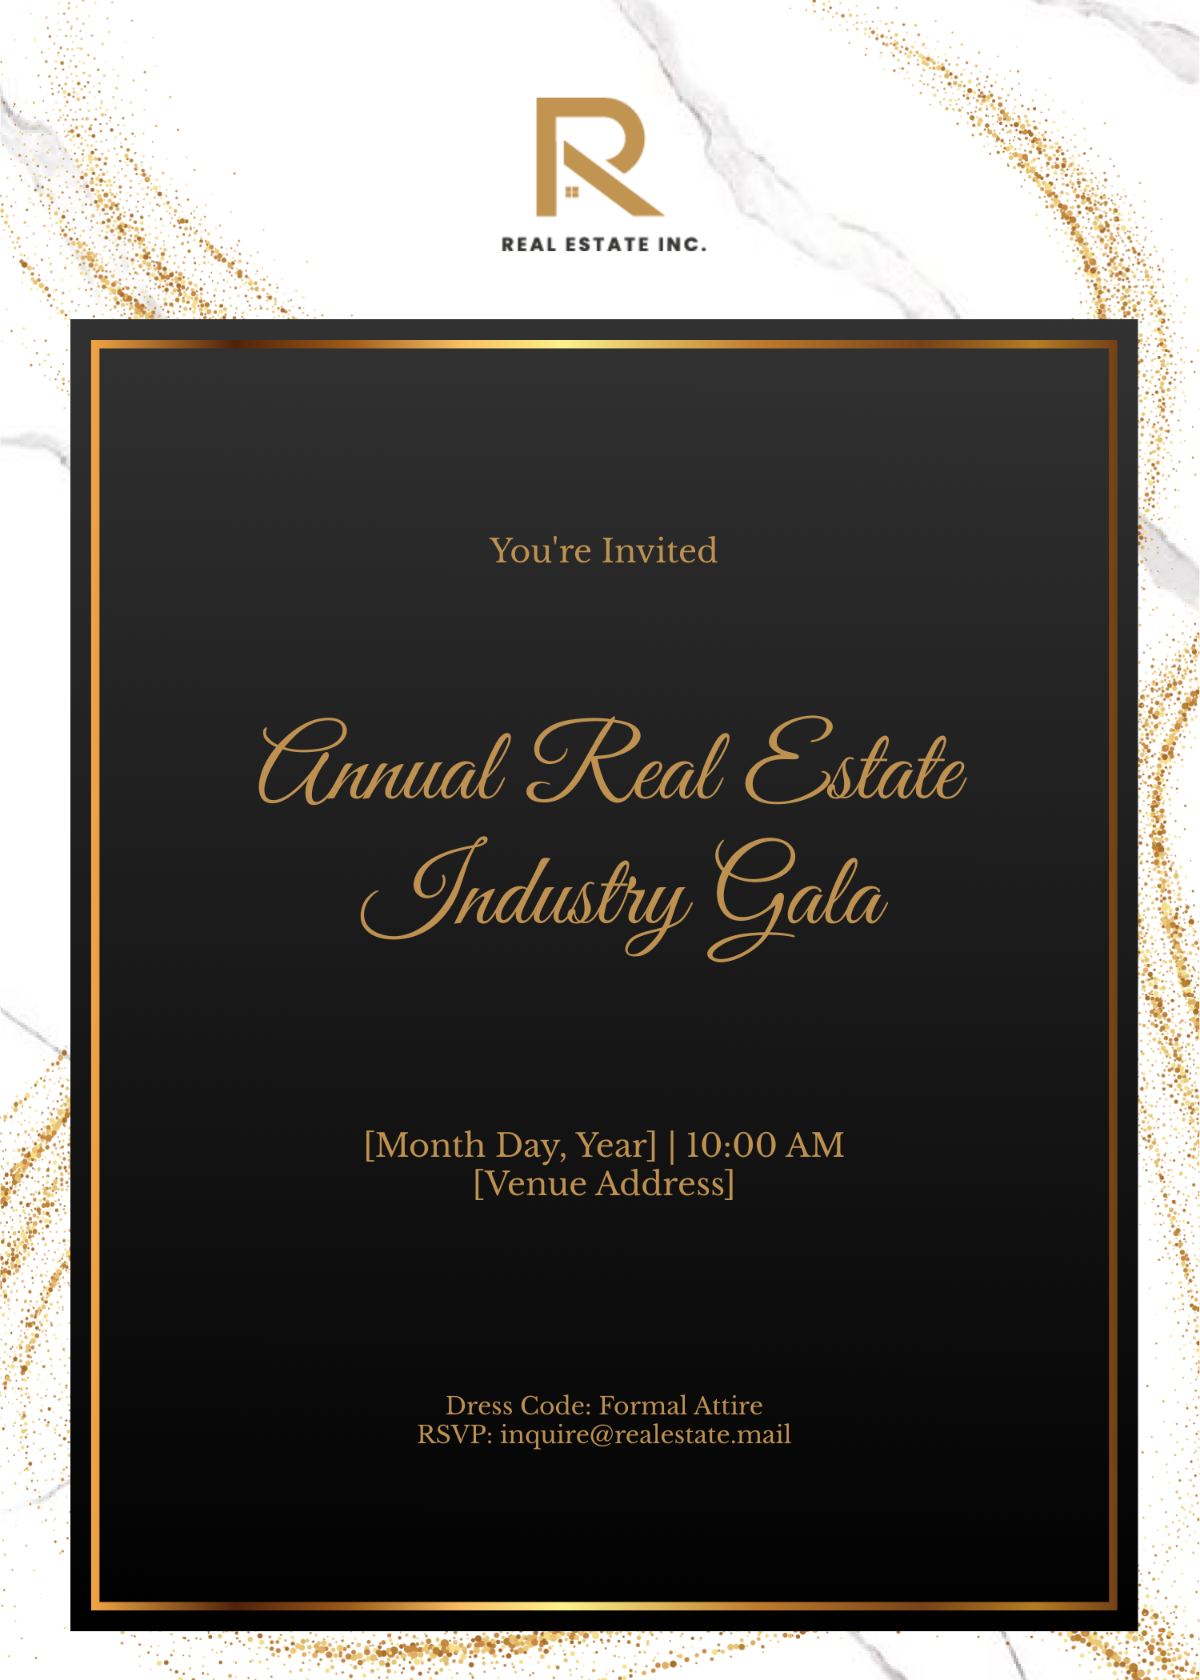 Annual Real Estate Industry Gala Invitation Card